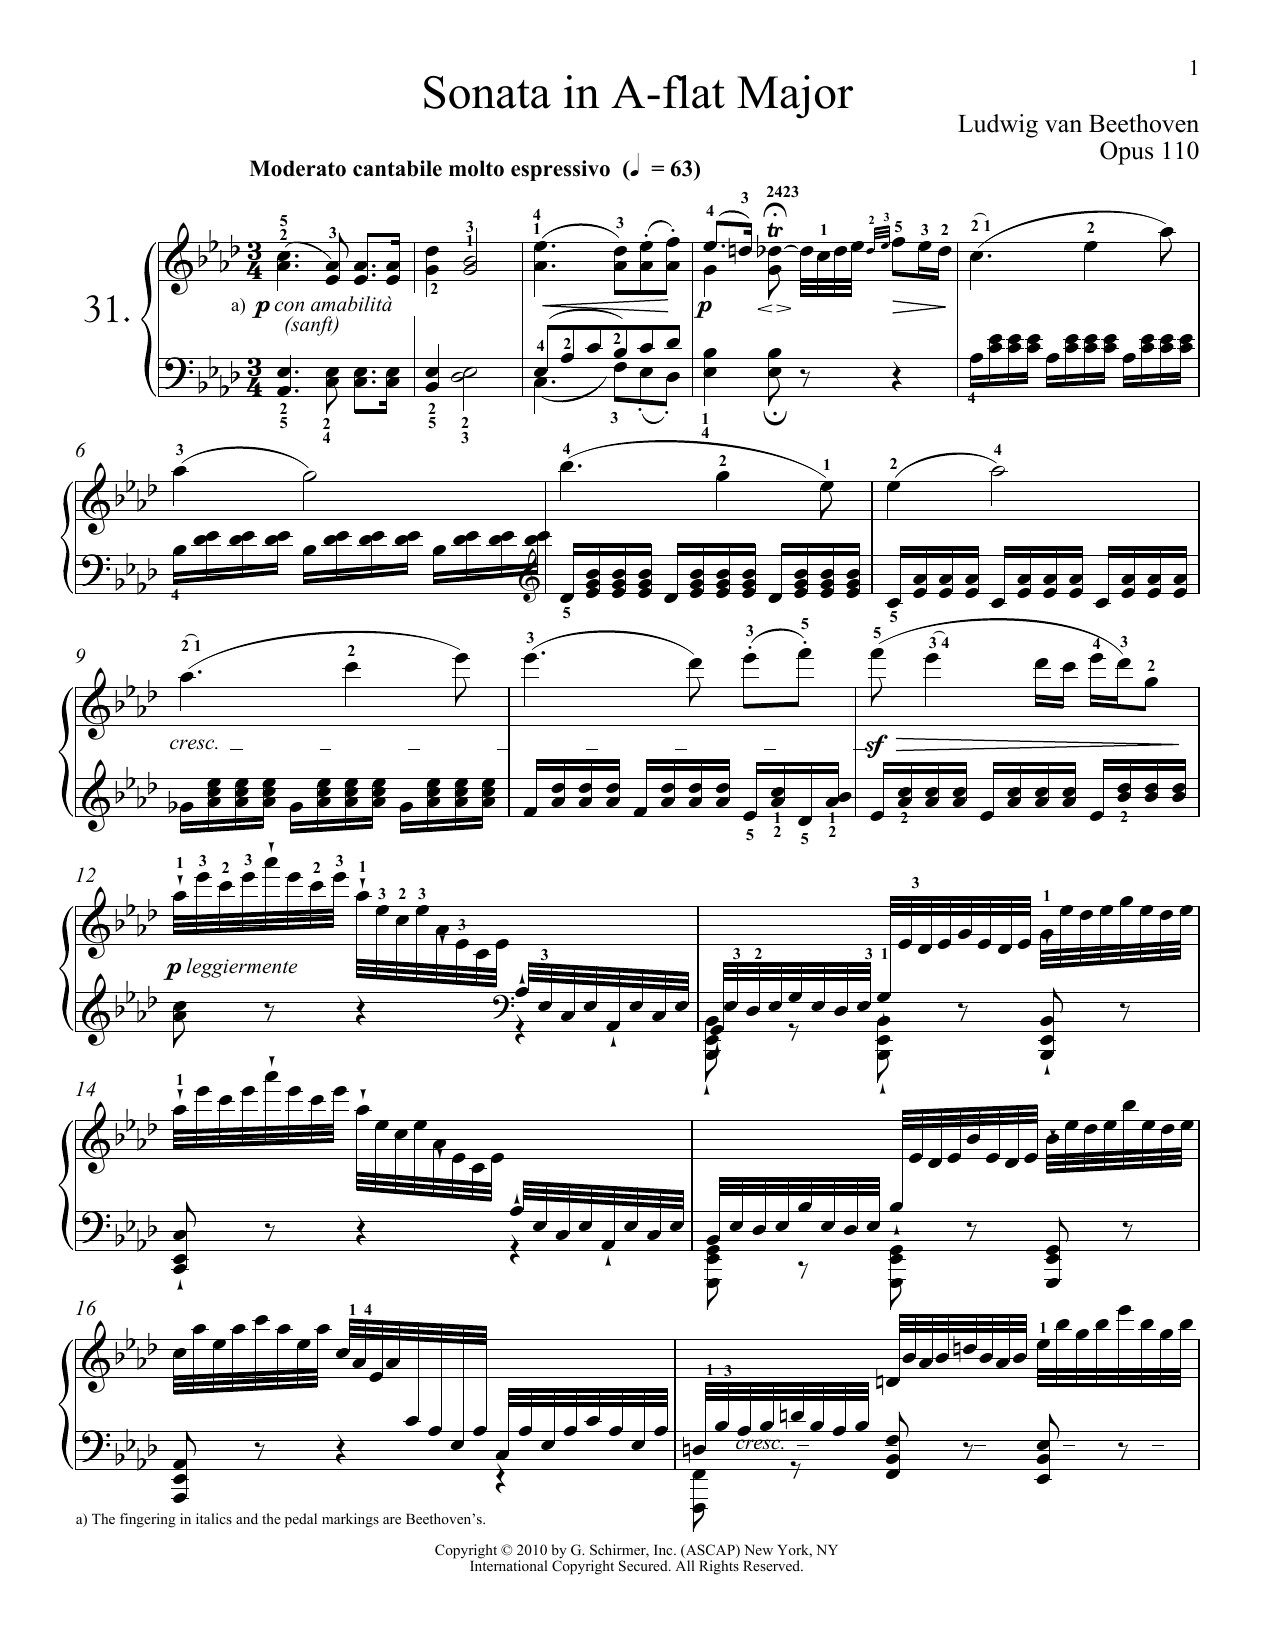 Ludwig van Beethoven Piano Sonata No. 31 In A-flat Major, Op. 110 Sheet Music Notes & Chords for Piano - Download or Print PDF